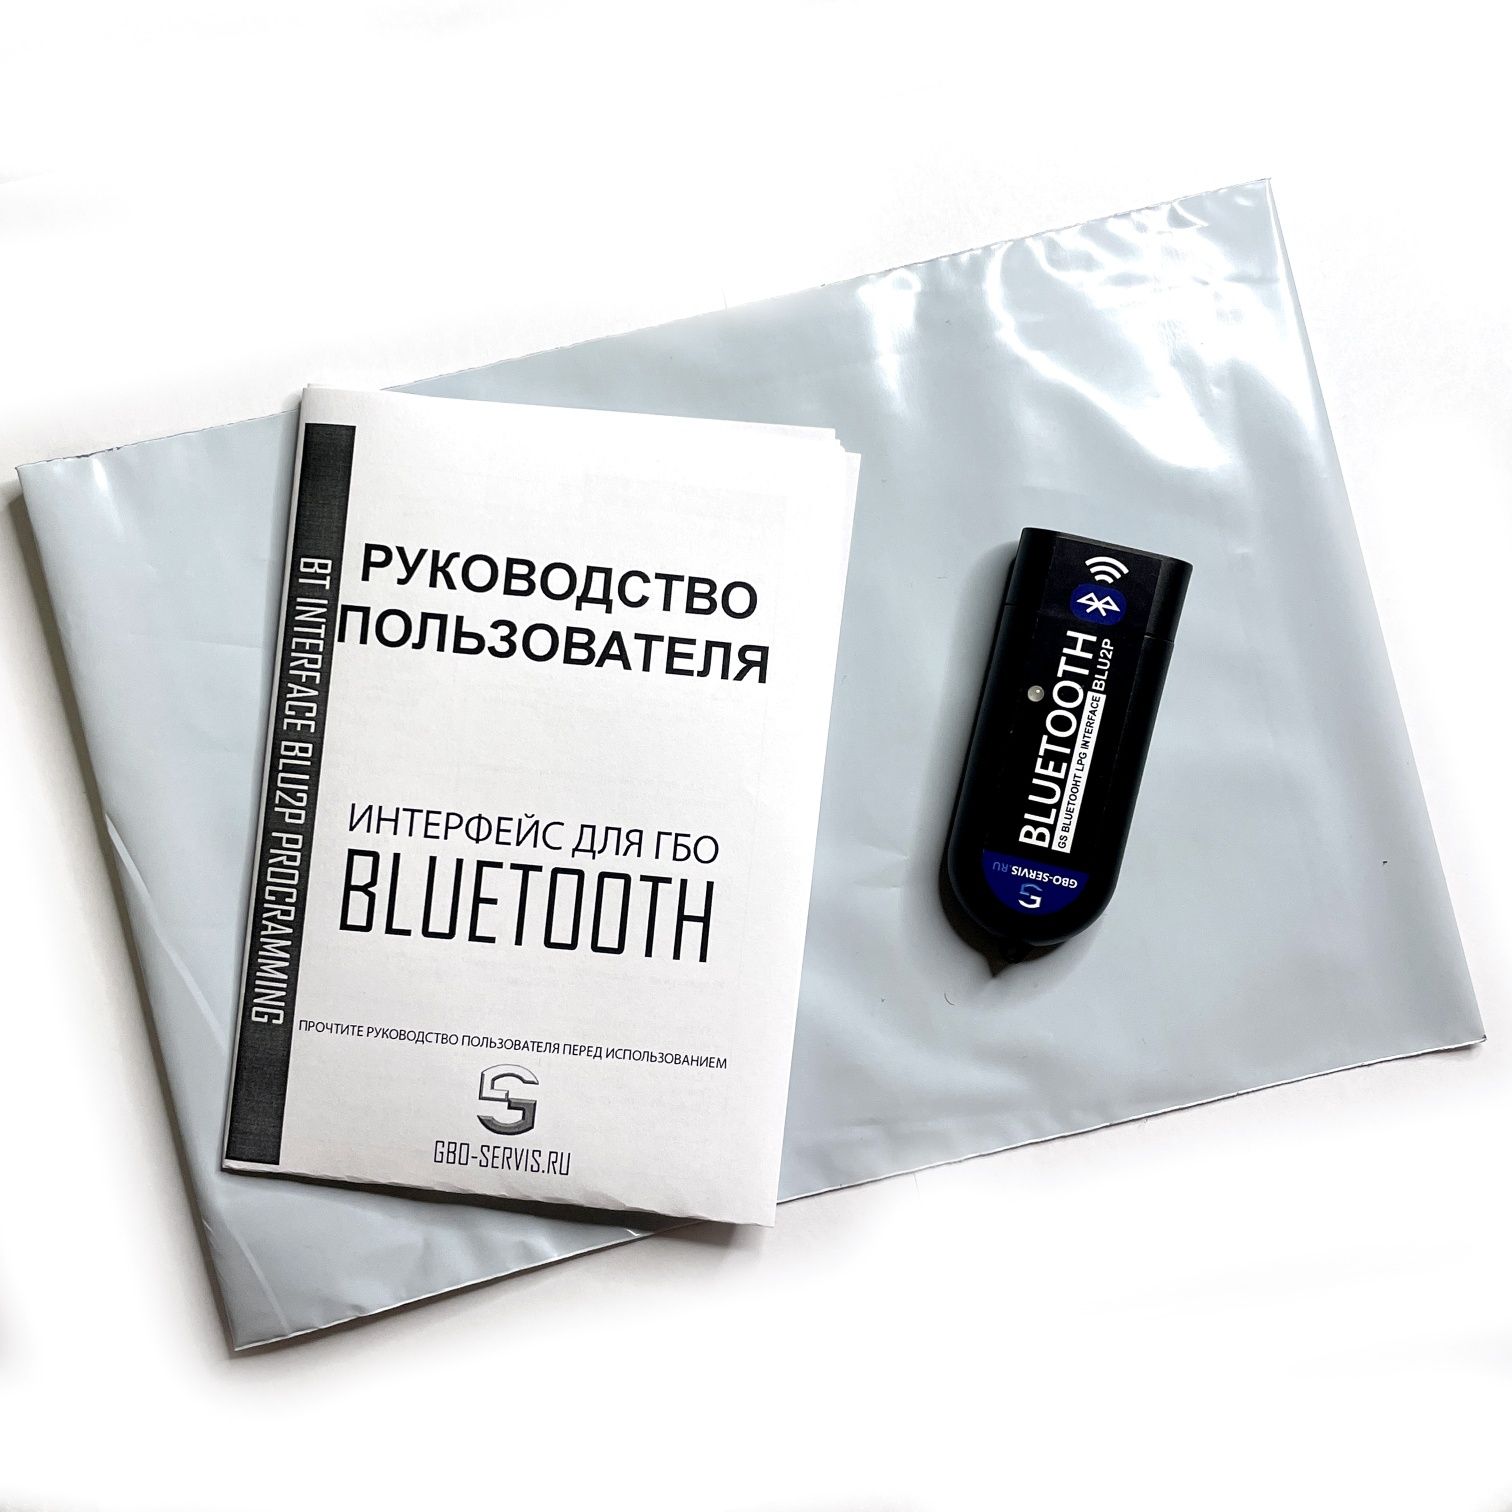 Bluetooth адаптер для ГБО STAG Q серия, Digitronic IQ, Maxi-2, BLU2P